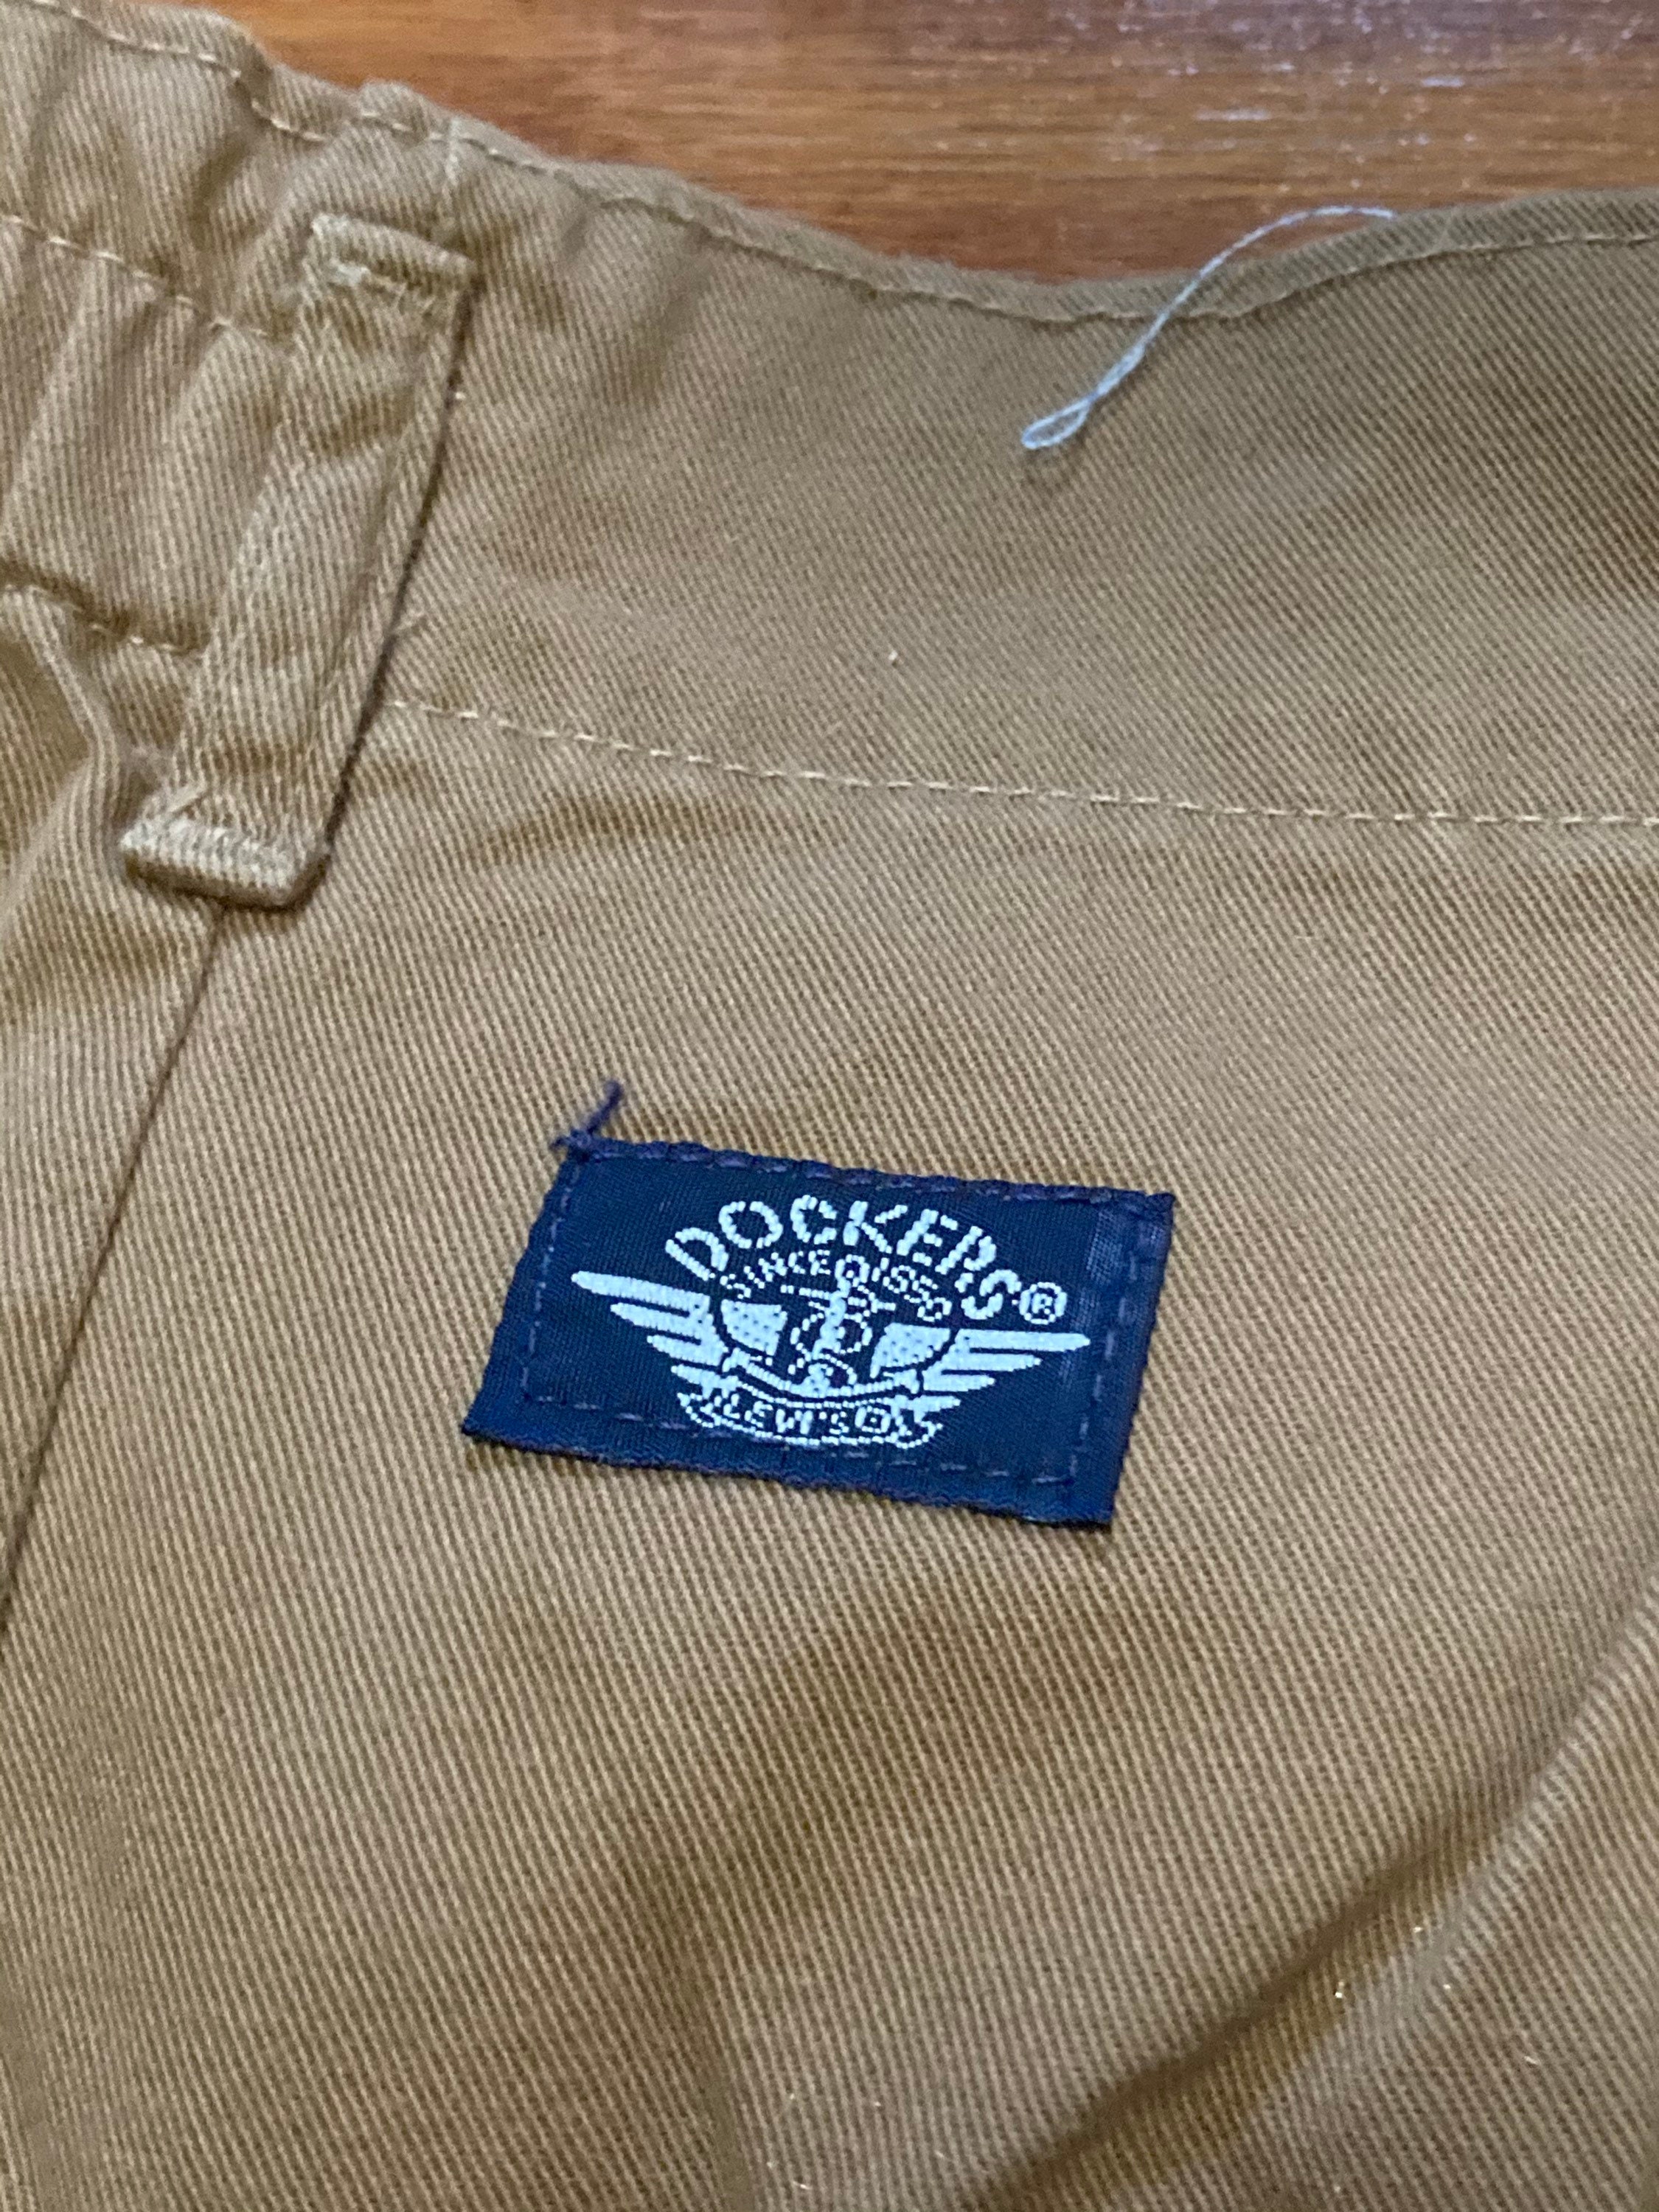 Vintage high waisted khaki pants Levis x Dockers size 12 | Etsy